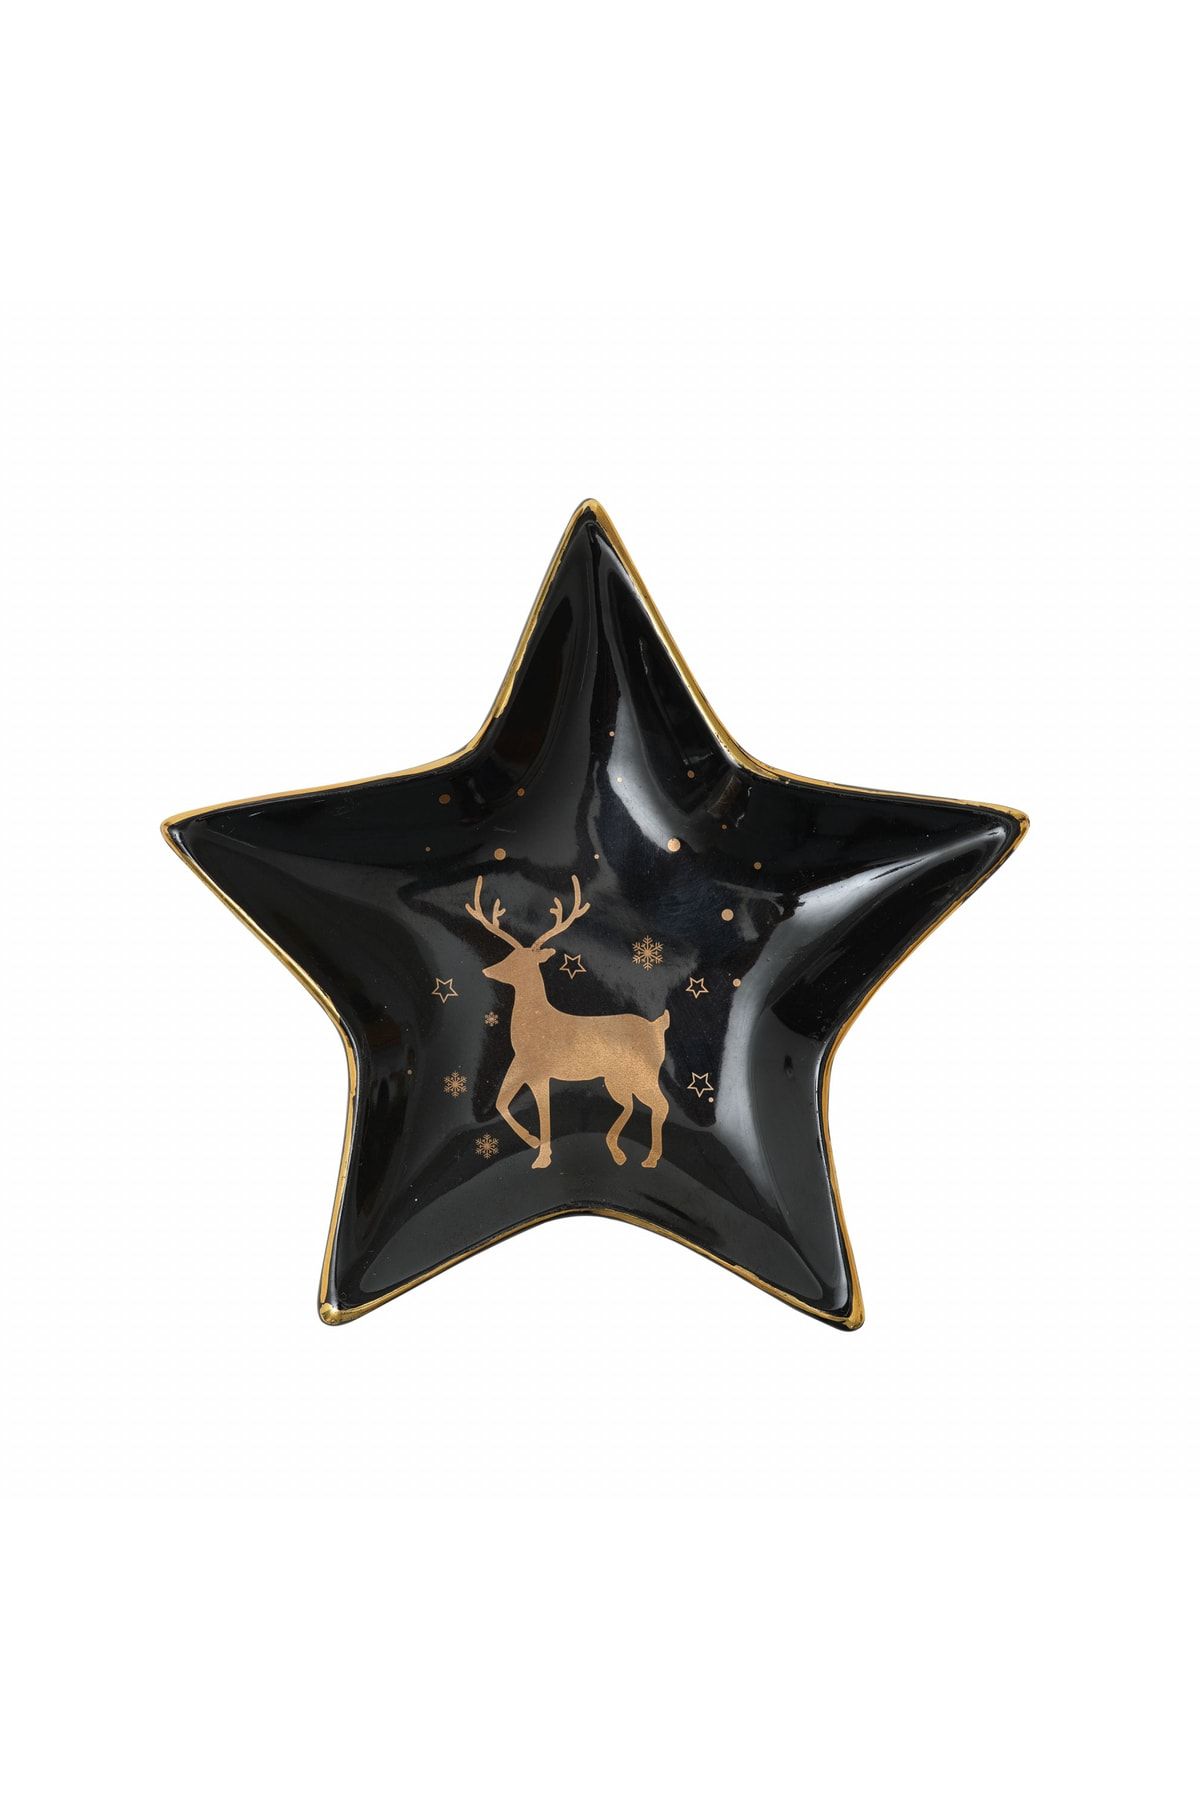 Karaca Home New Year Star Dekoratif Tabak 15 cm